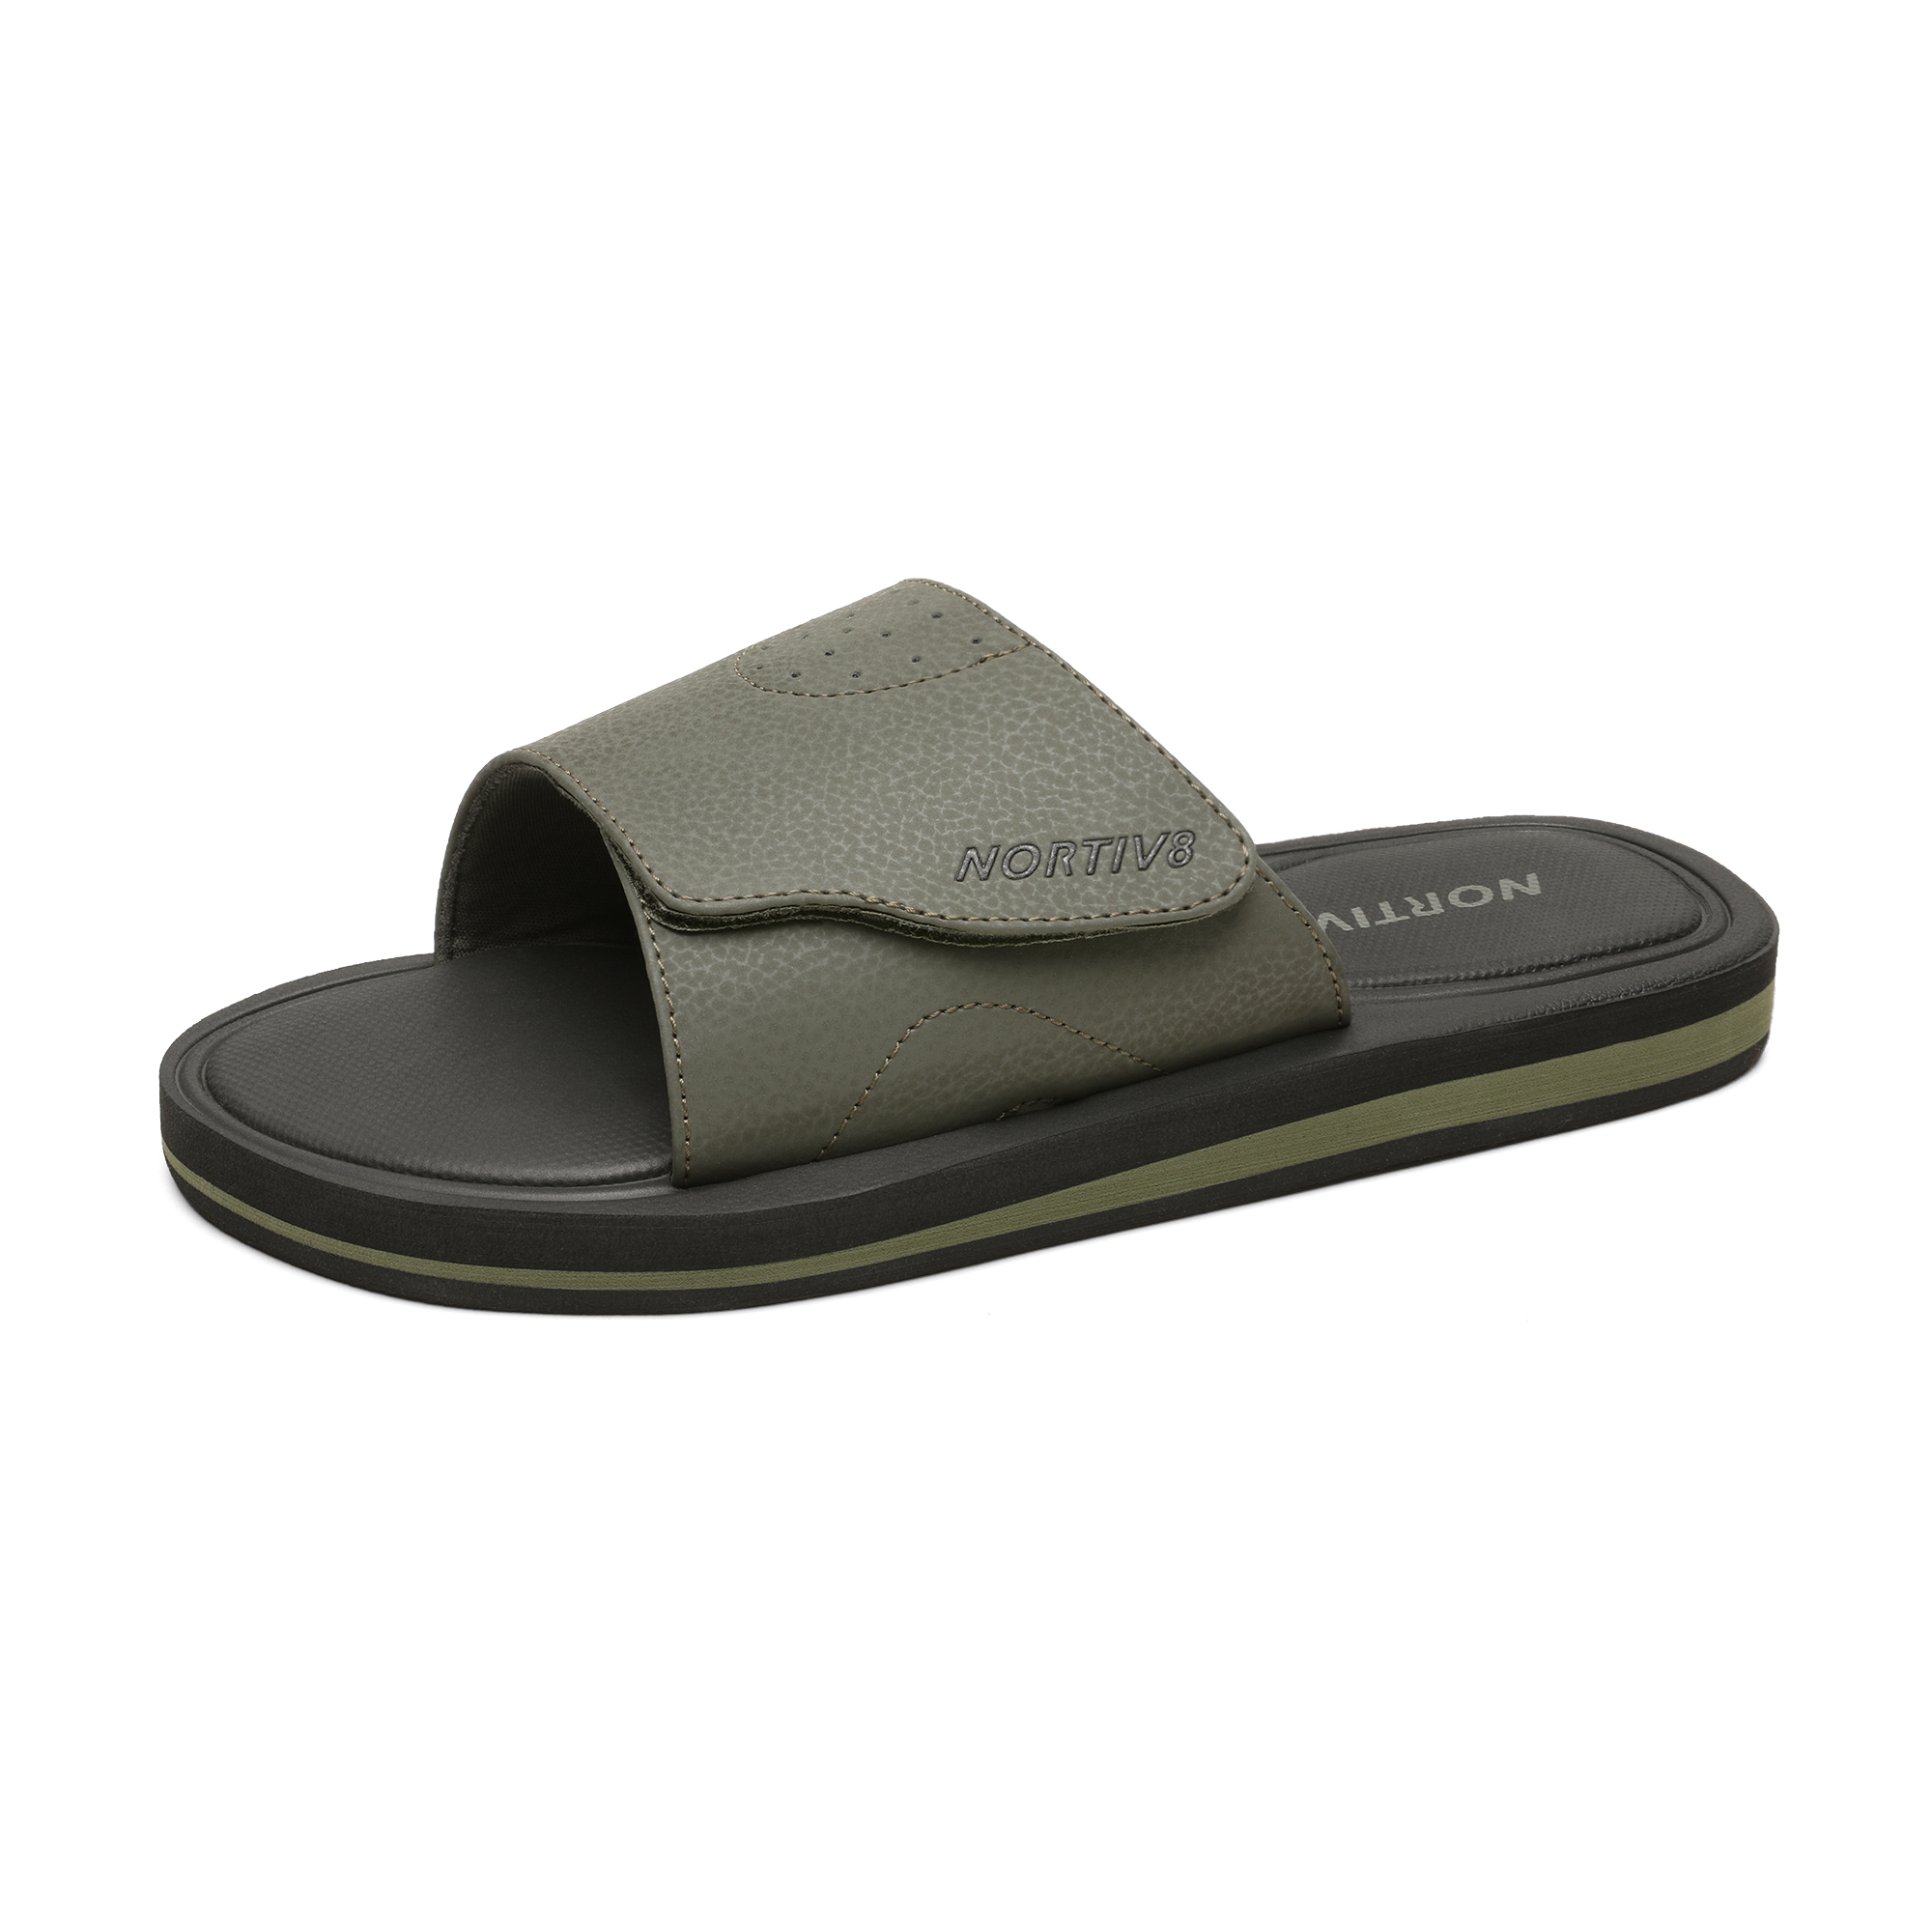 Nortiv8 Men's Memory Foam Adjustable Slide Sandals Comfort Lightweight Summer Beach Sandals Shoes FUSION OLIVE/GREEN Size 8 - image 1 of 5